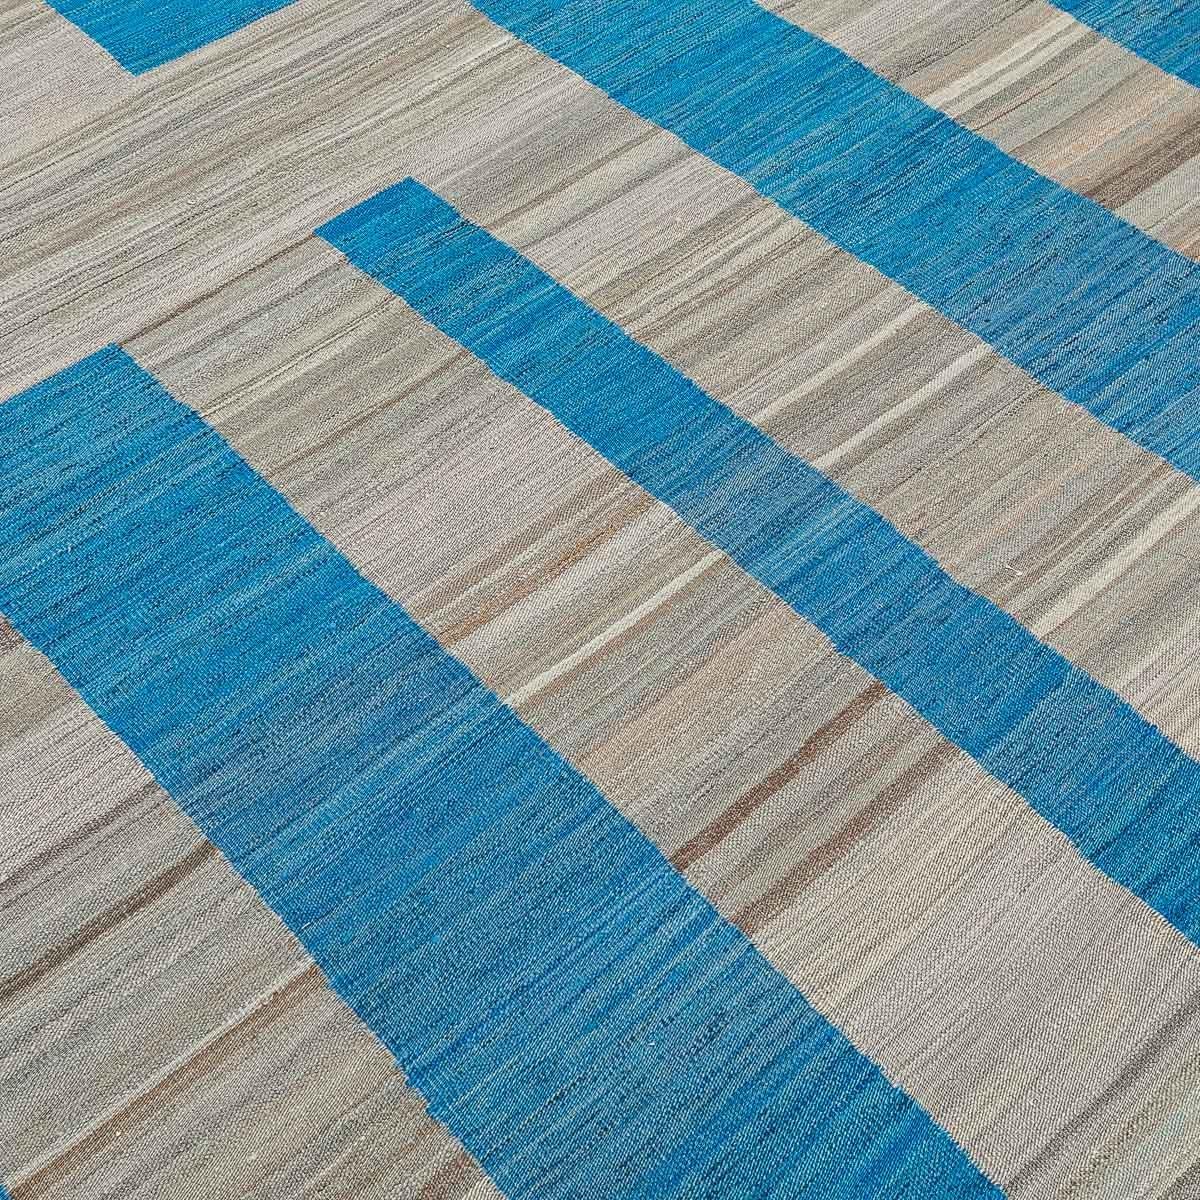 Handmade Flat-Weave Kilim Blue and Gray Wool Geometrical Design. 2.90 x 2.05 m. For Sale 2